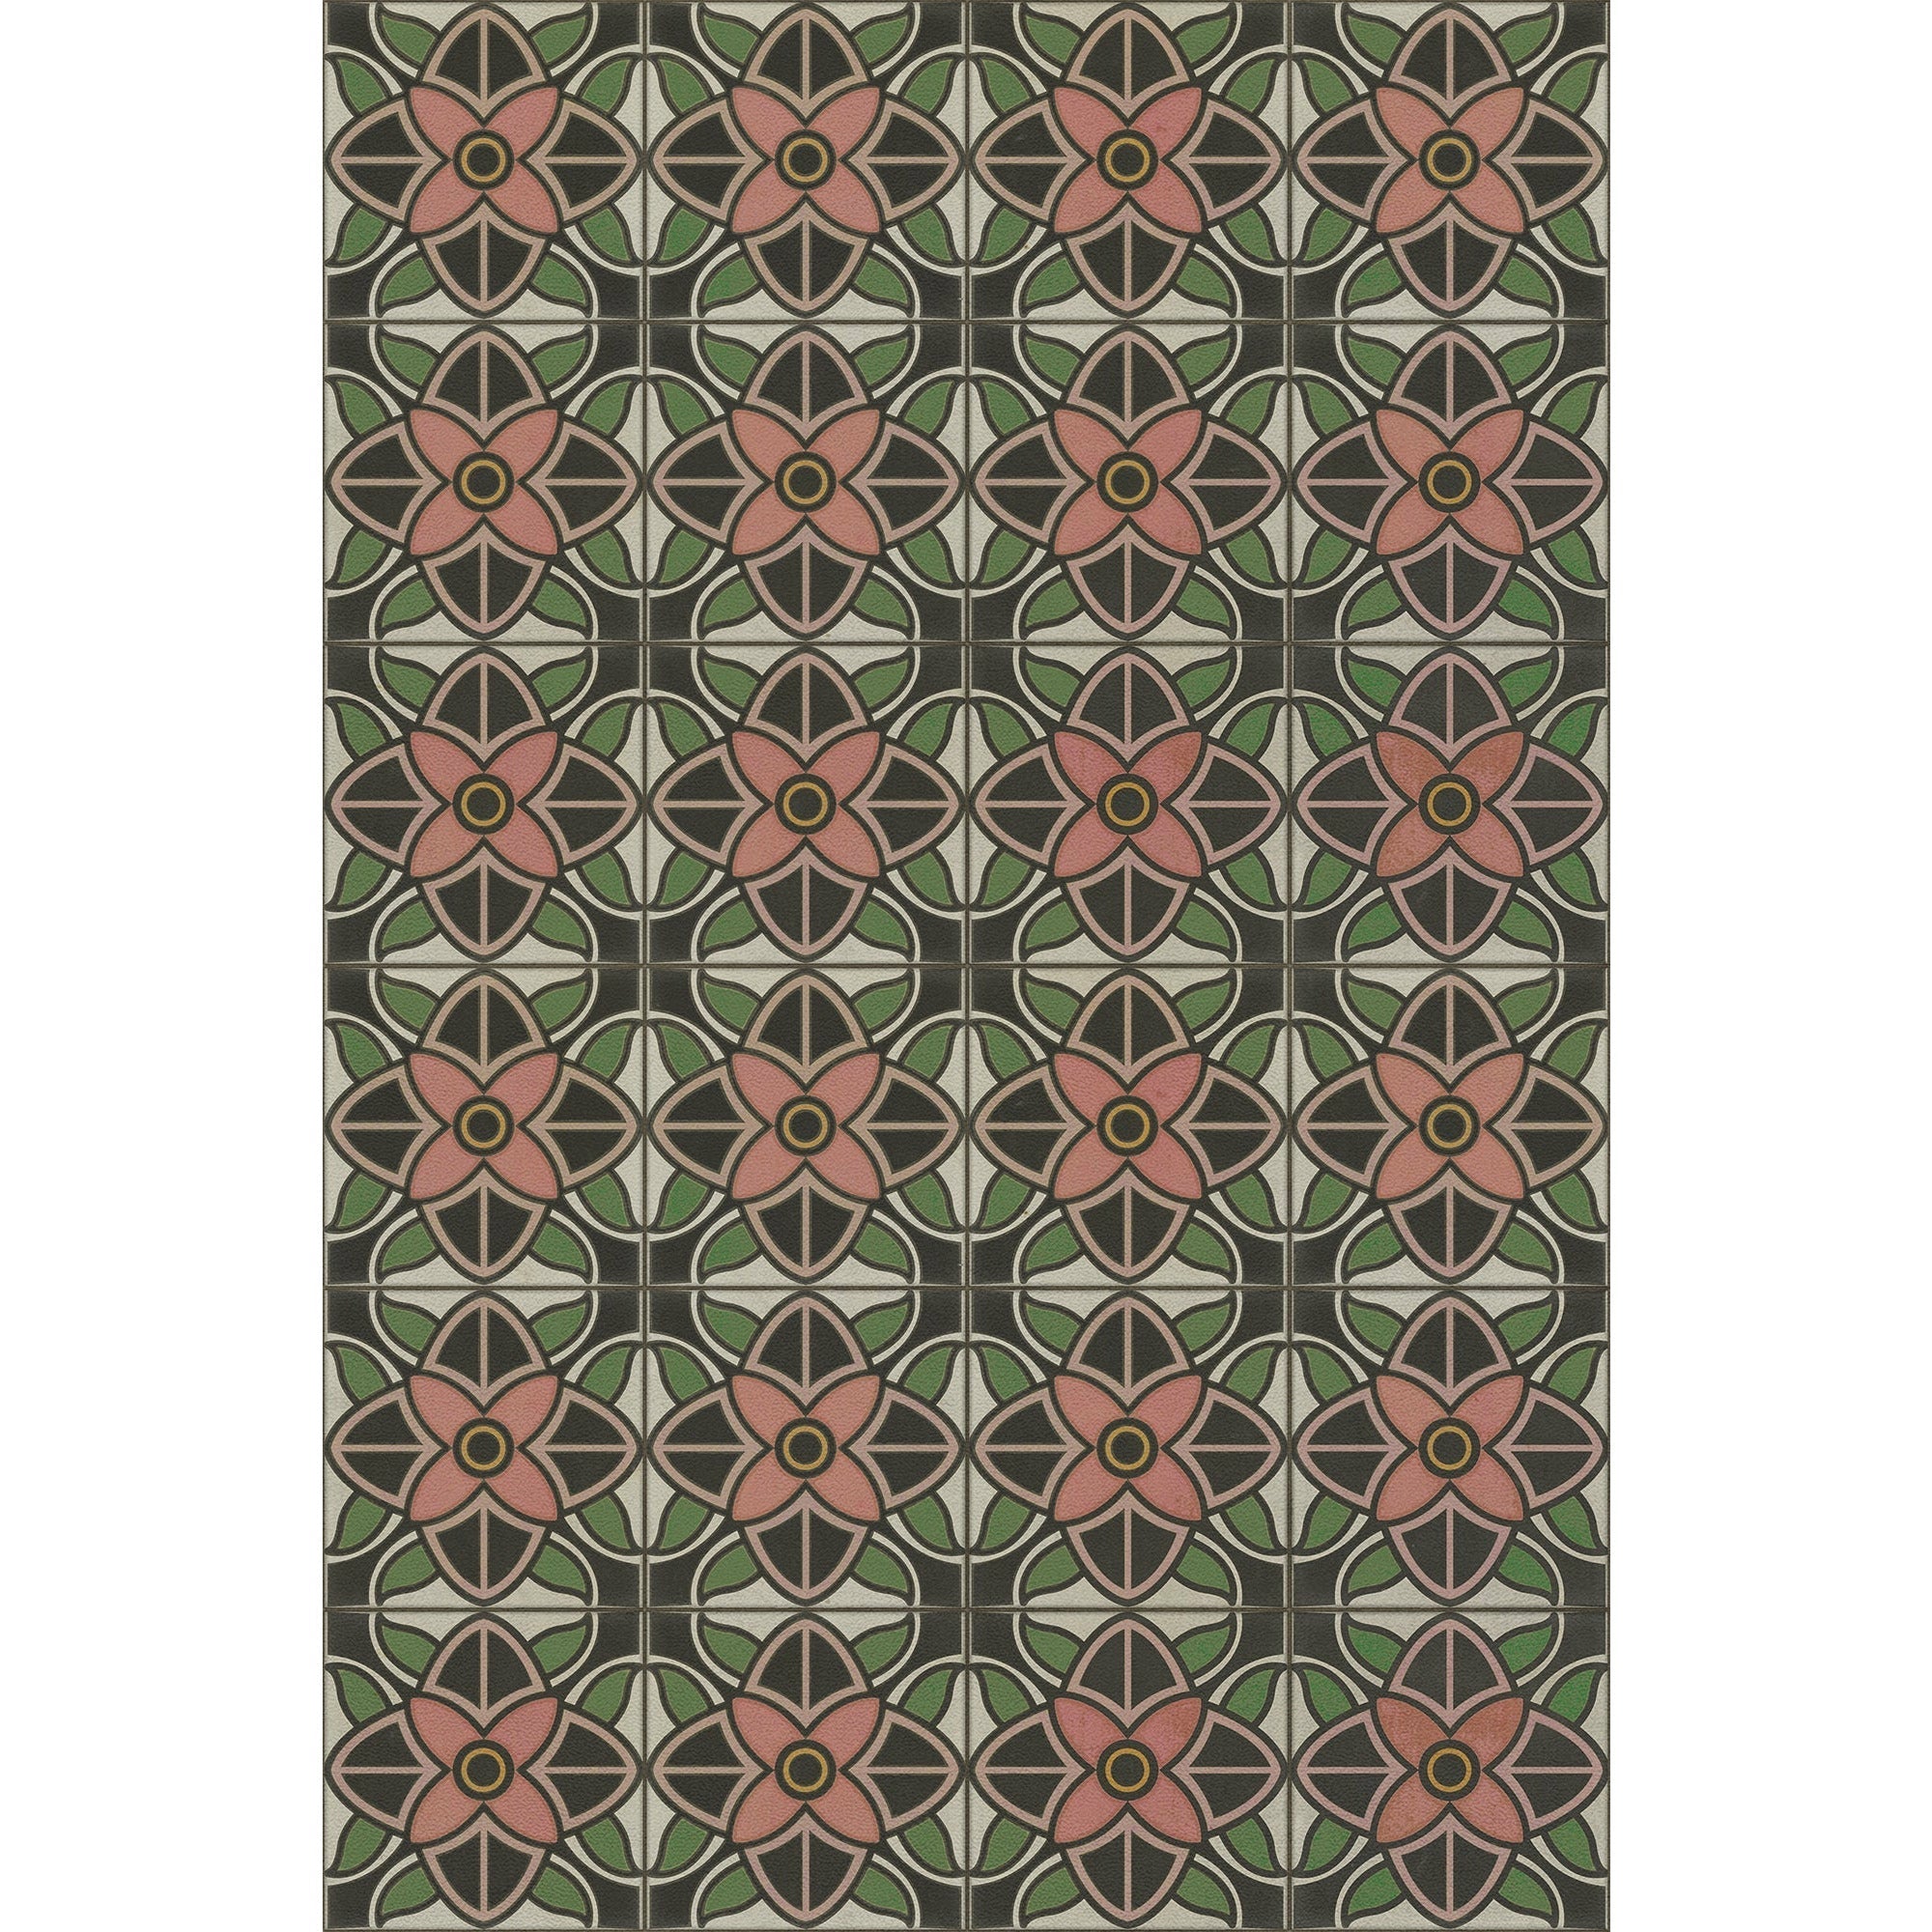 Pattern 80 Shirley Temple Vinyl Floor Cloth